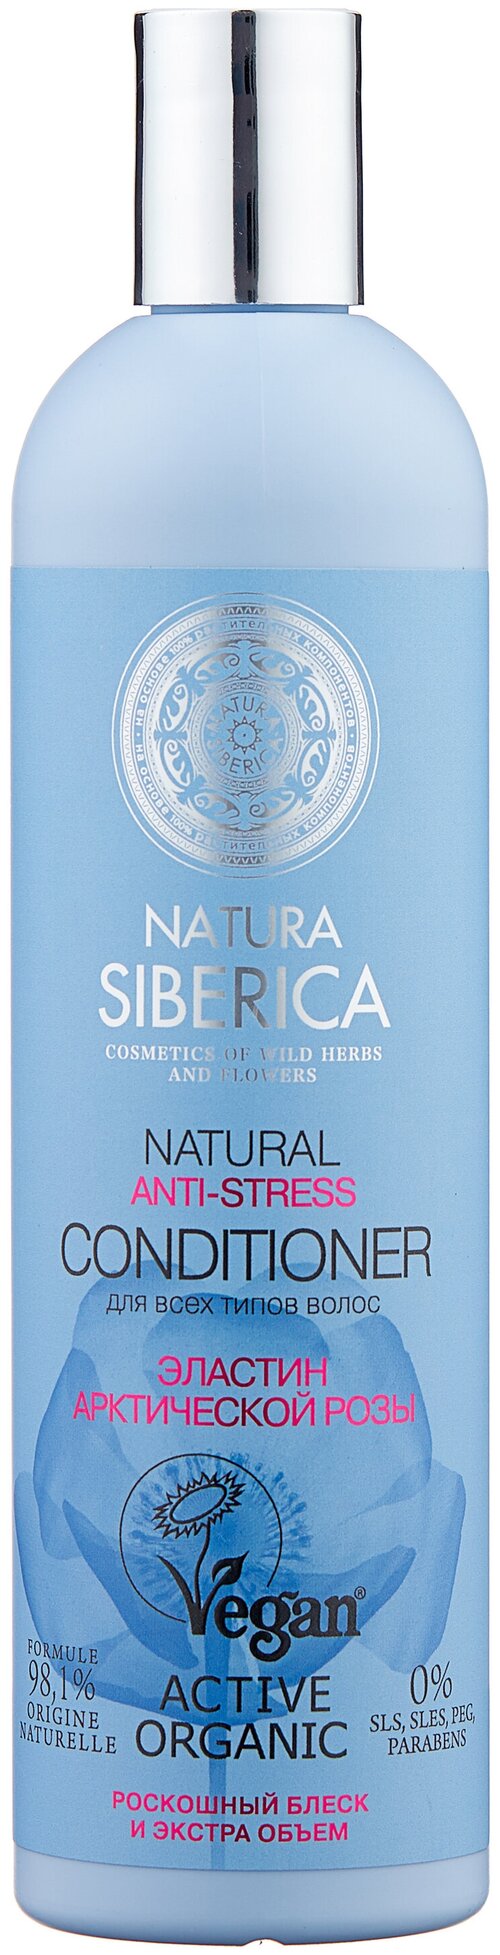 Natura Siberica бальзам Anti-stress для всех типов волос, 400 мл